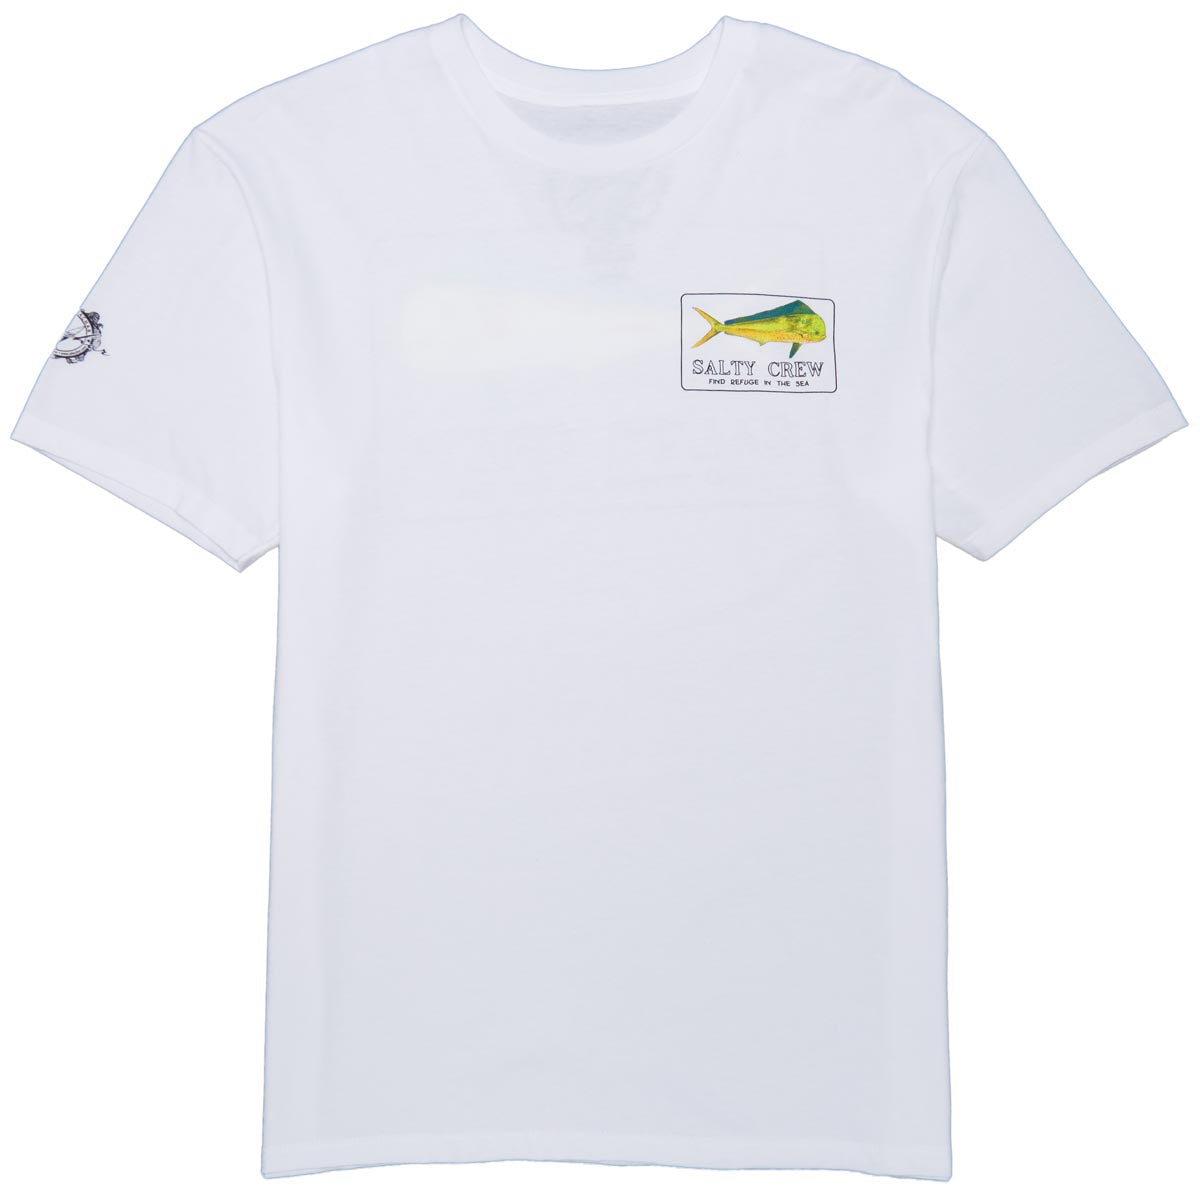 Salty Crew Golden Mahi Premium T-Shirt - White image 2